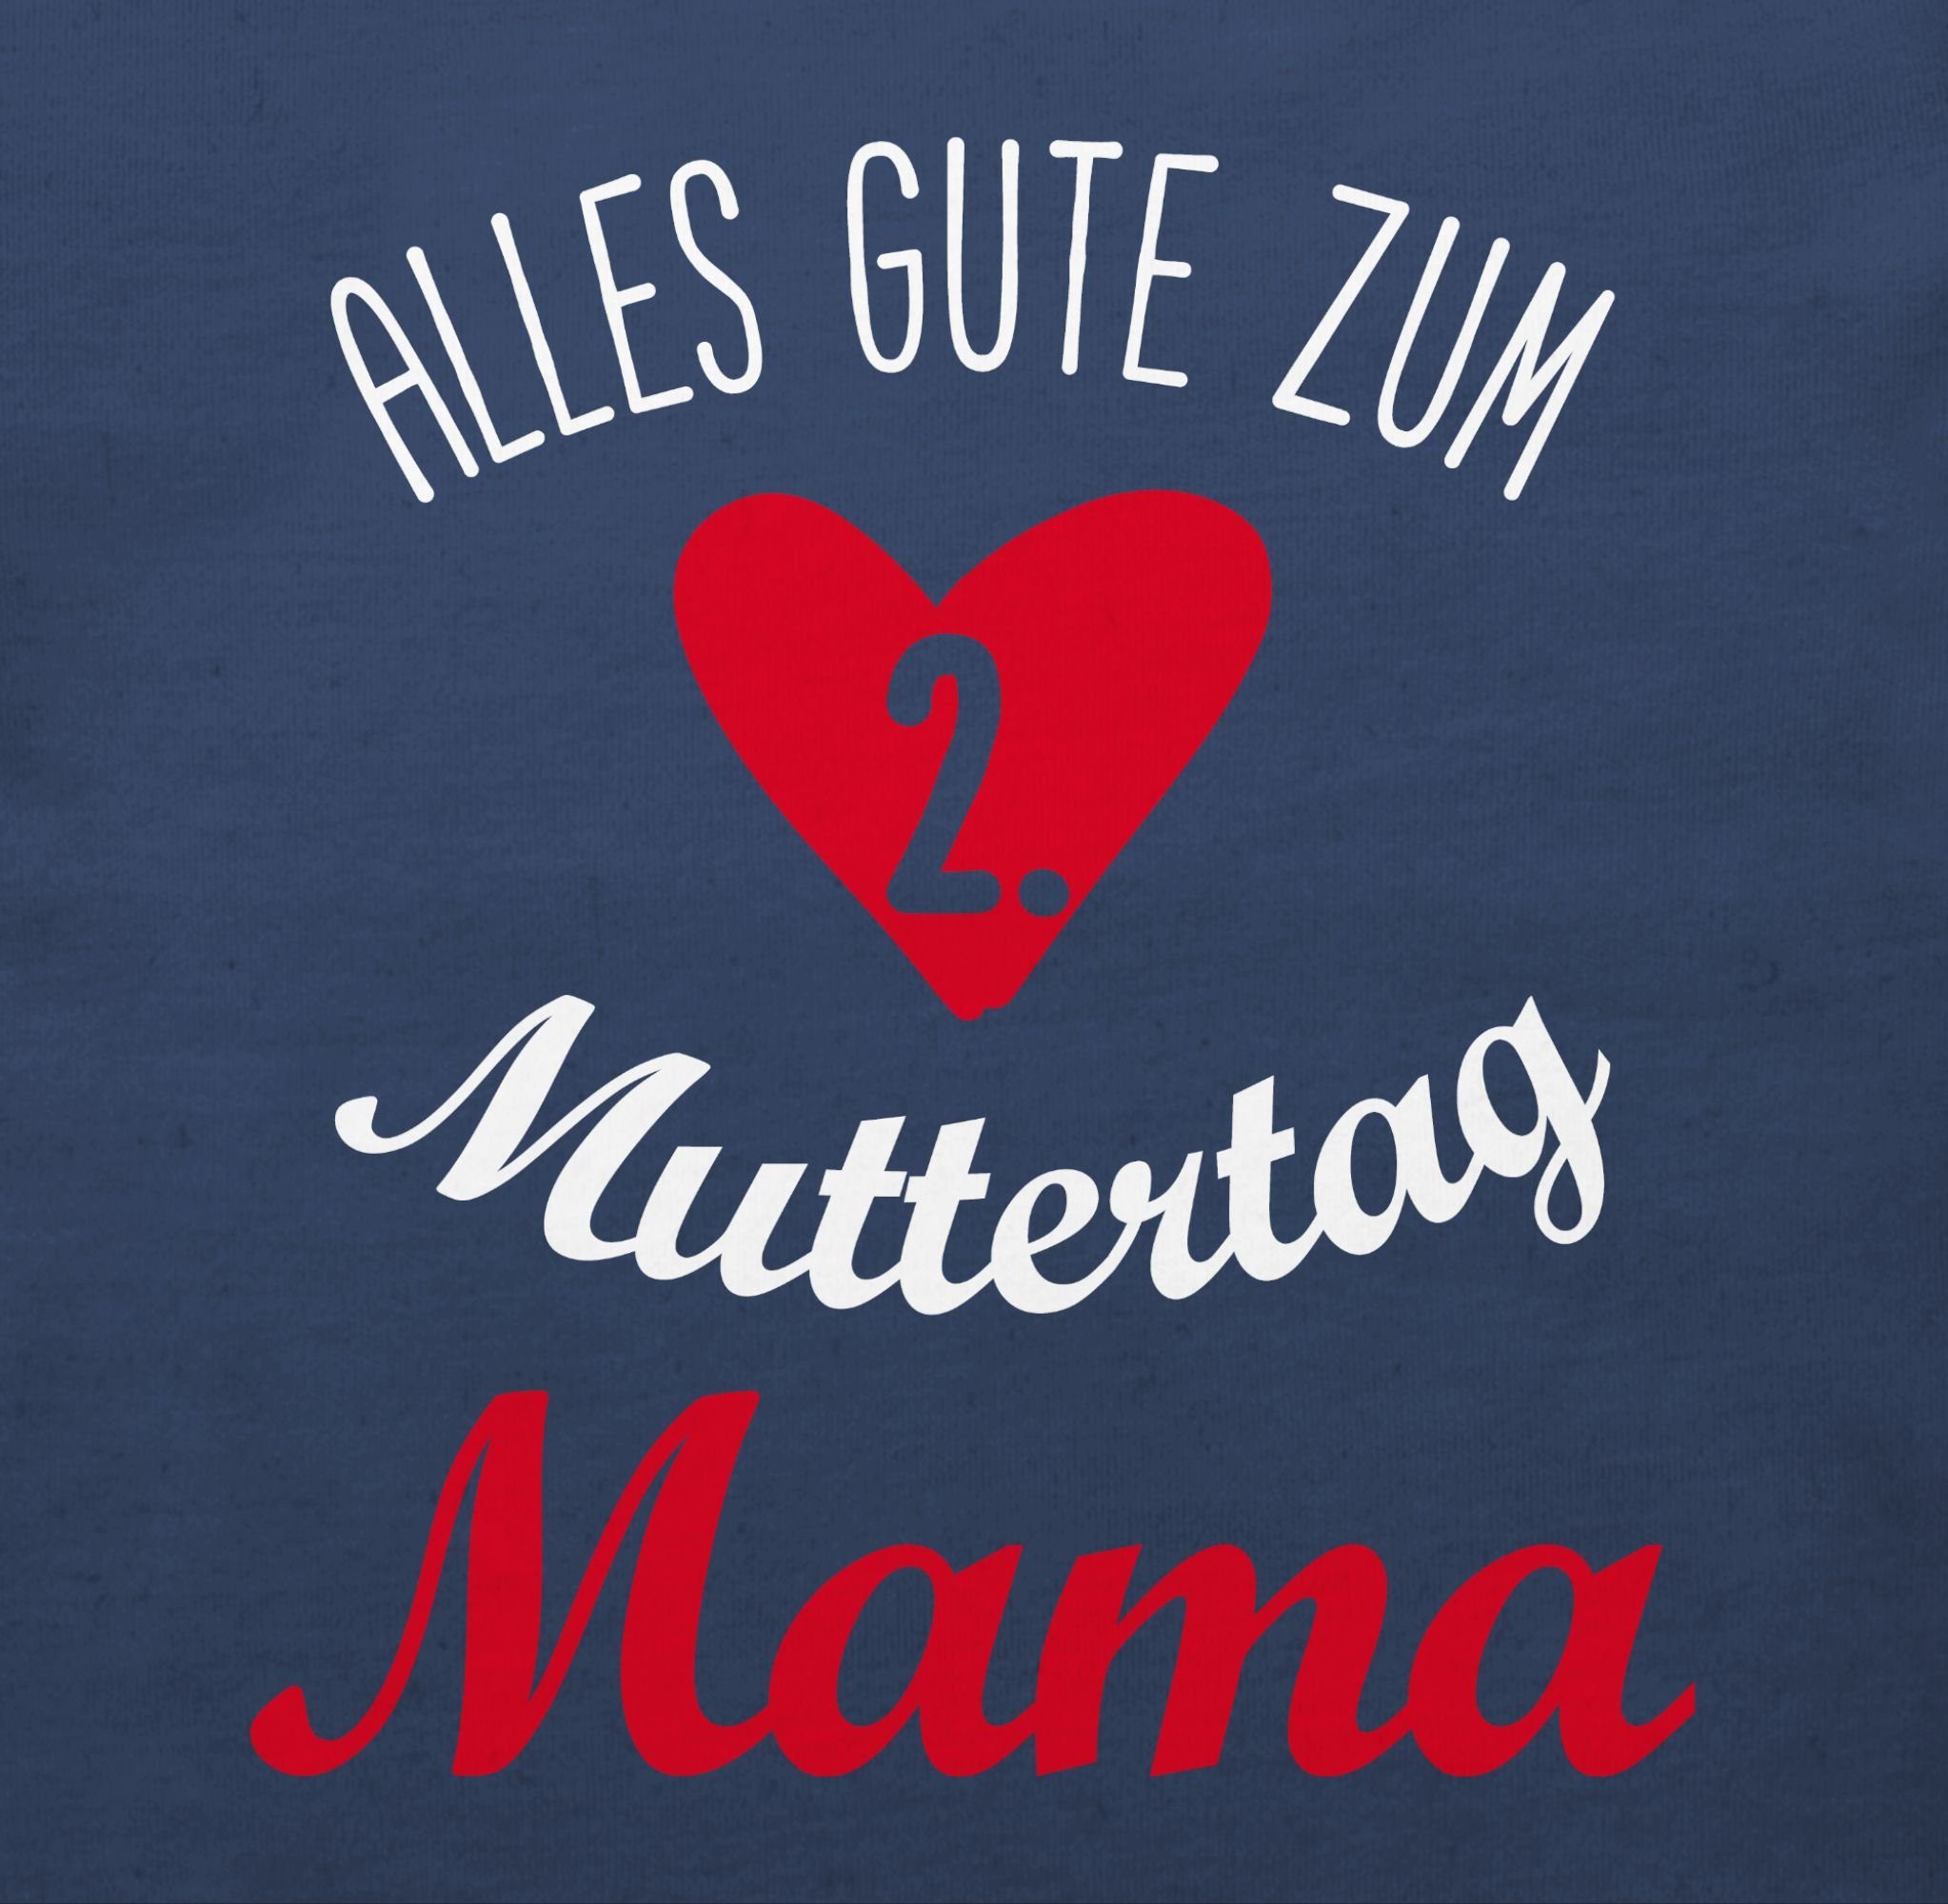 Navy Alles 1 2. gute Muttertag zweiten T-Shirt zum Muttertagsgeschenk Blau I Shirtracer Muttertag